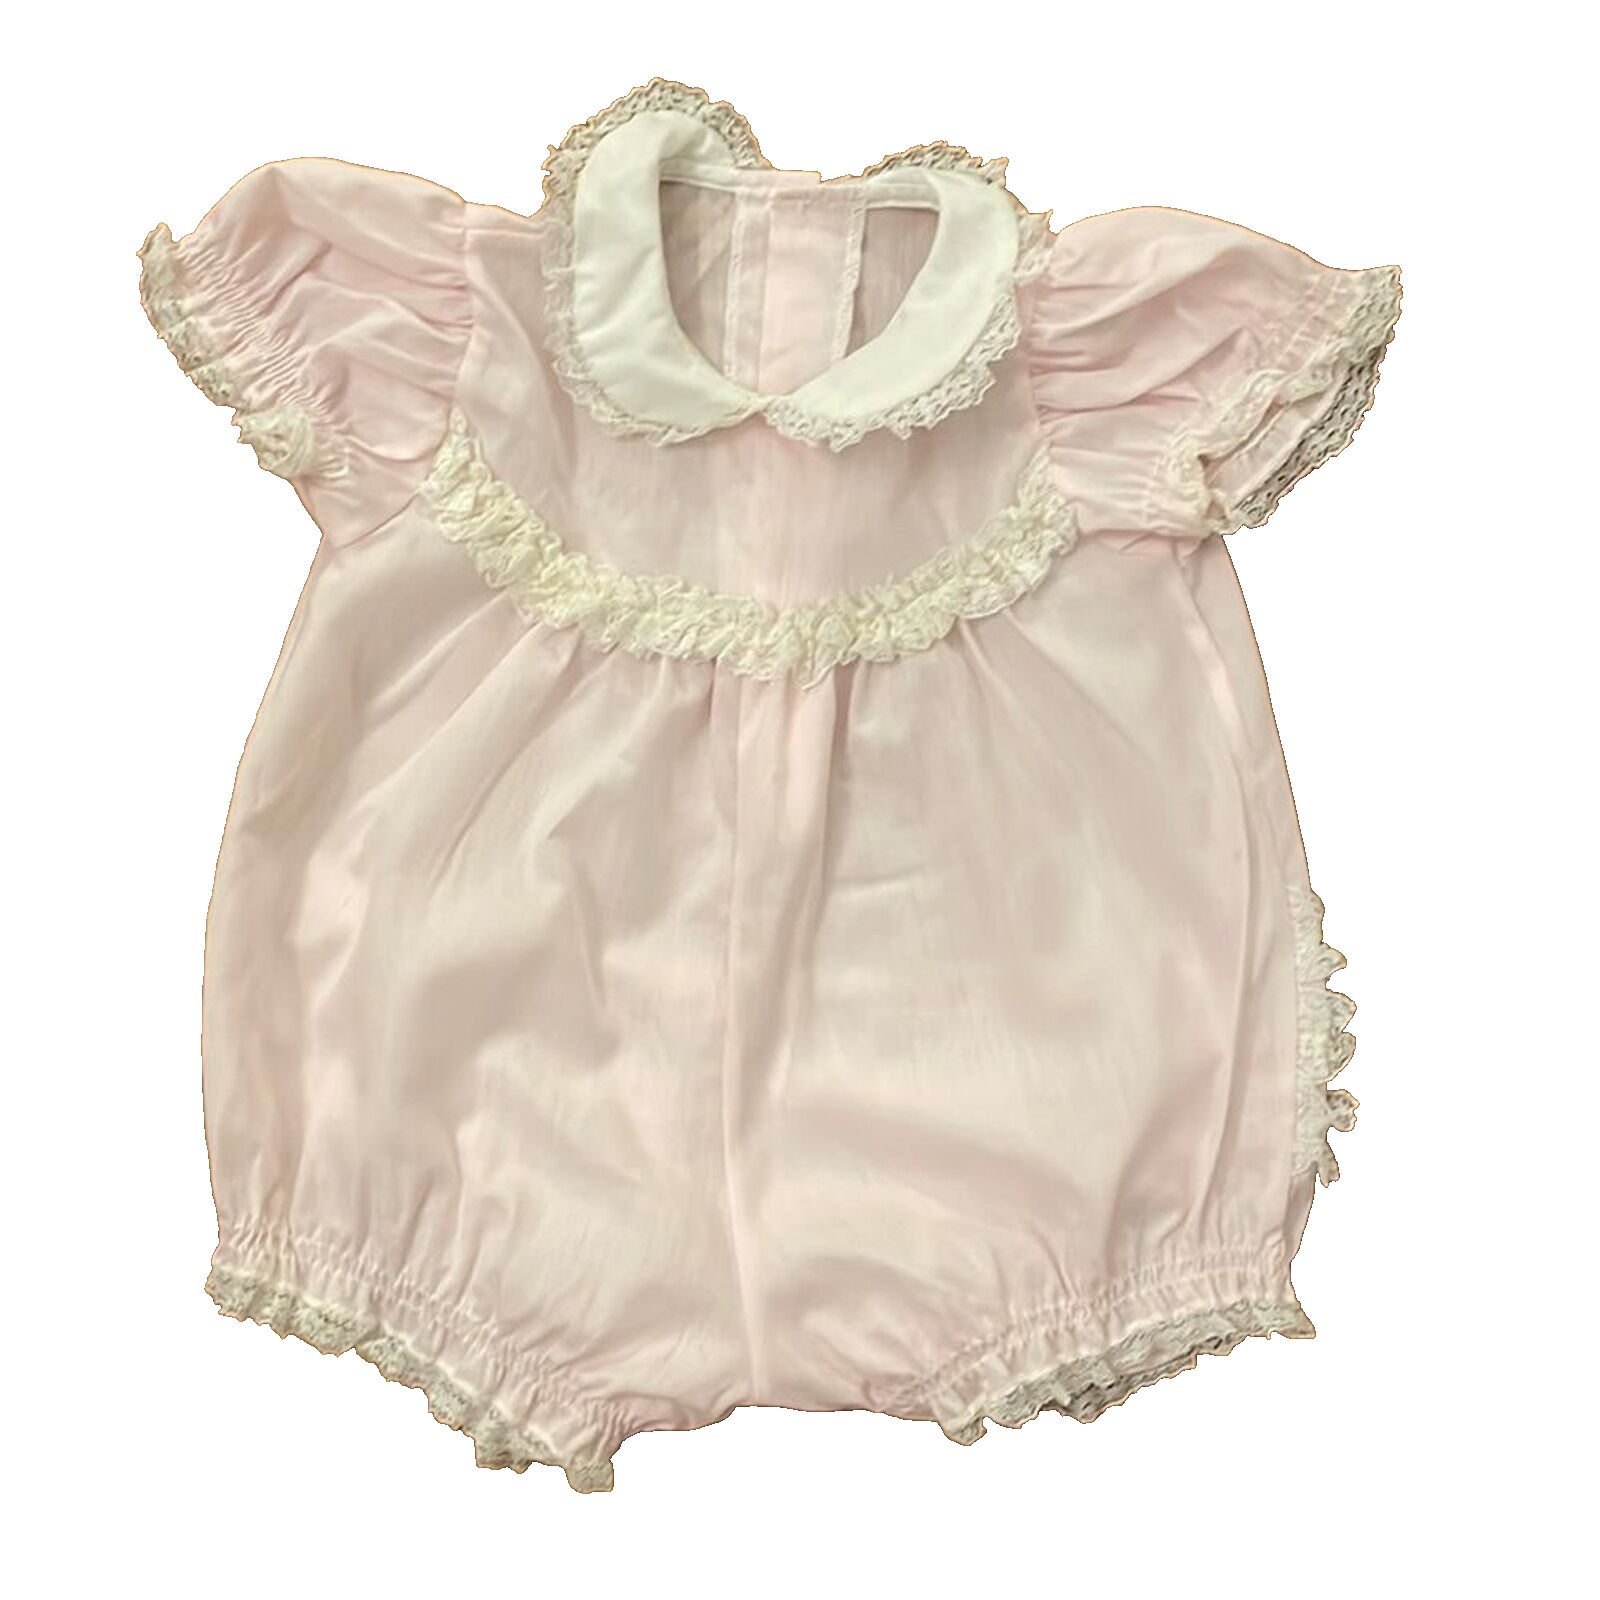 Primary image for Bryan Vintage Pink Lace Short Sleeve Romper Infant Size 3-6 months?